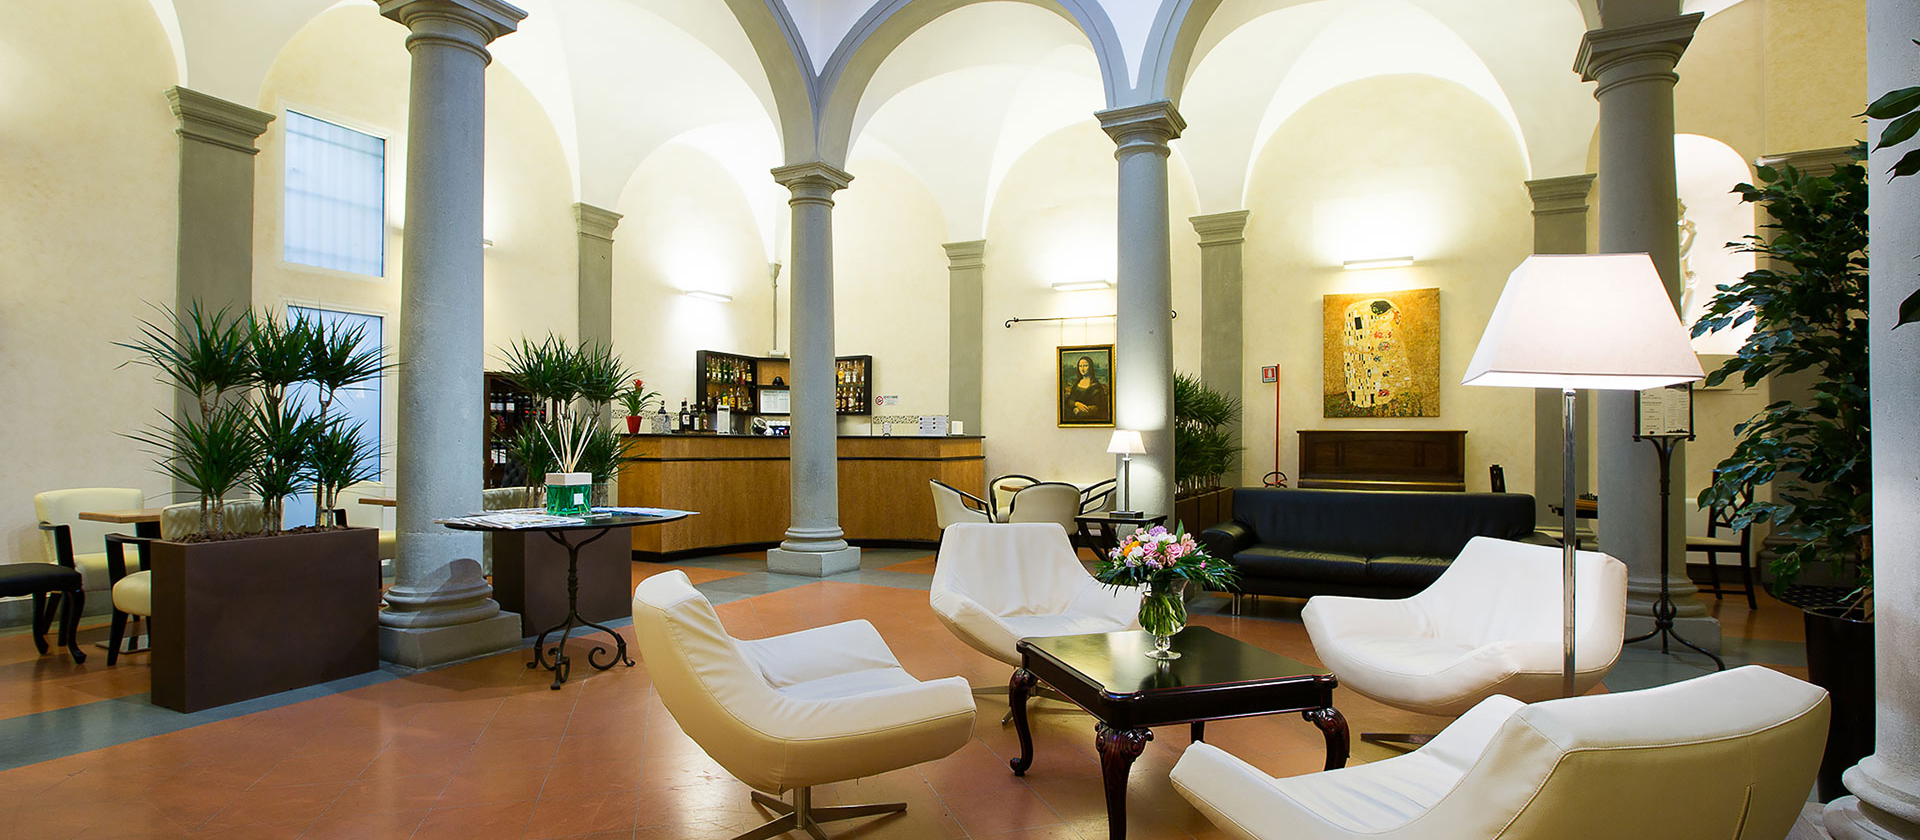 3 Hotel Centrale Firenze Lounge Bar